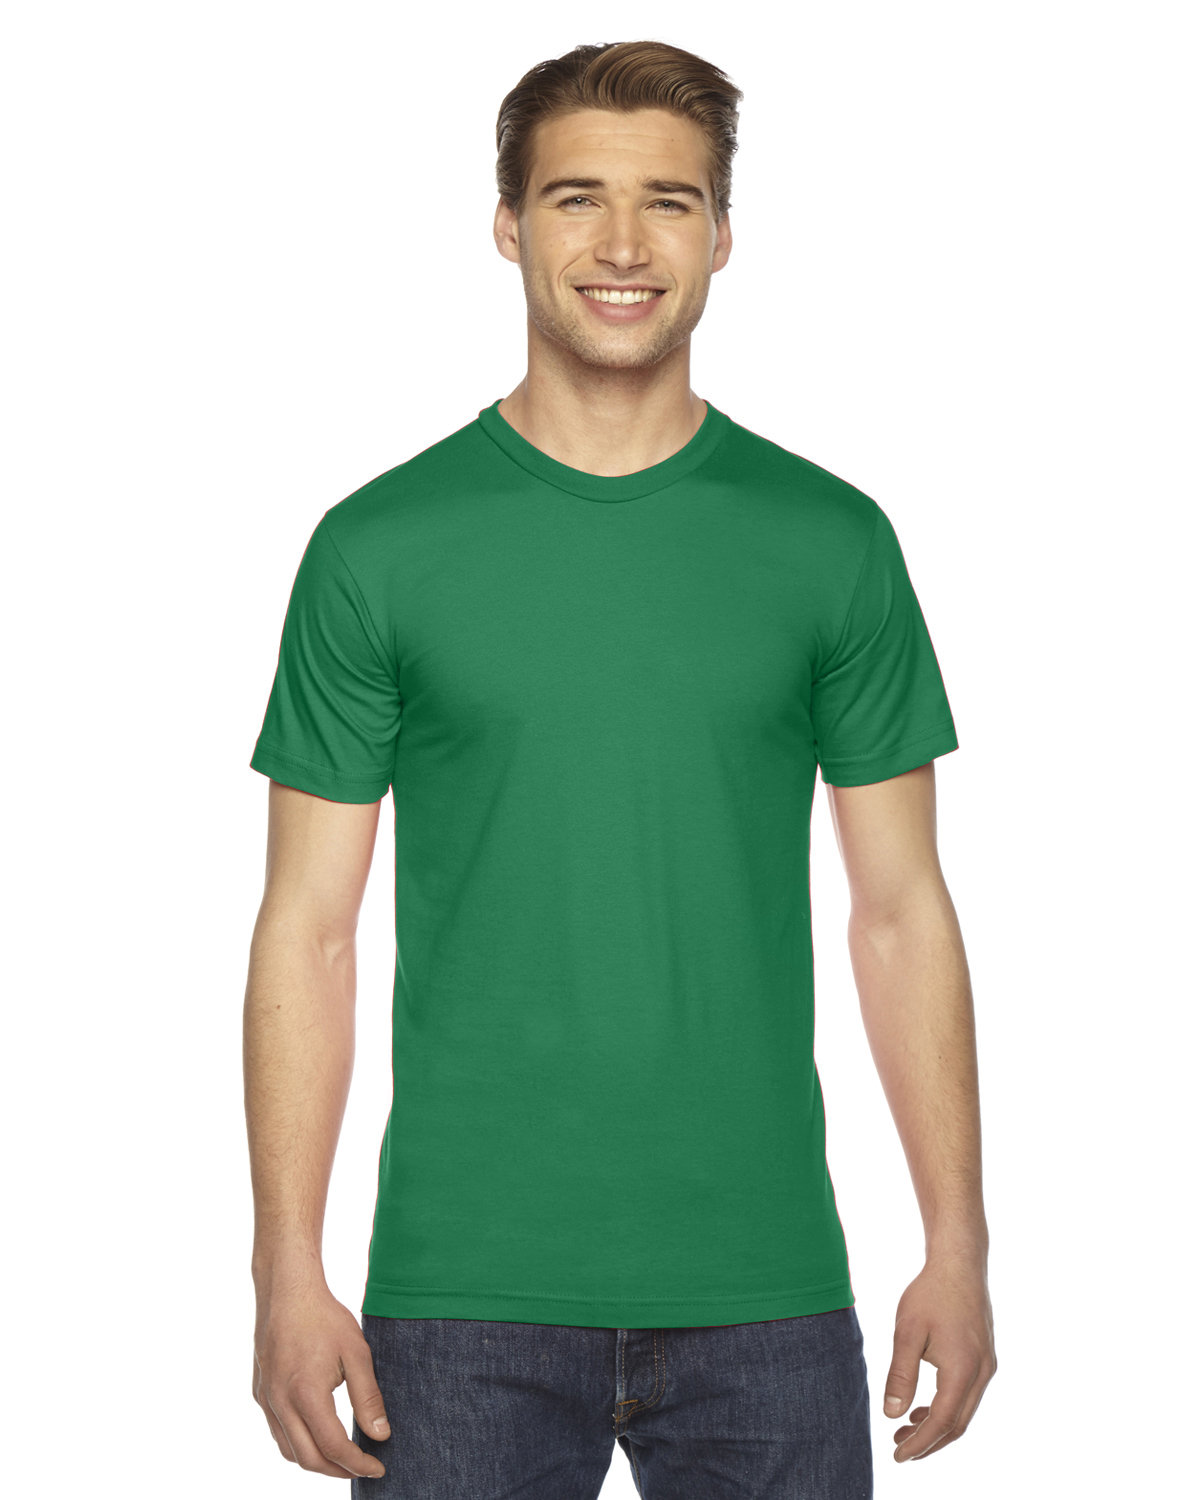 American Apparel Unisex Fine Jersey Short-Sleeve T-Shirt KELLY GREEN 